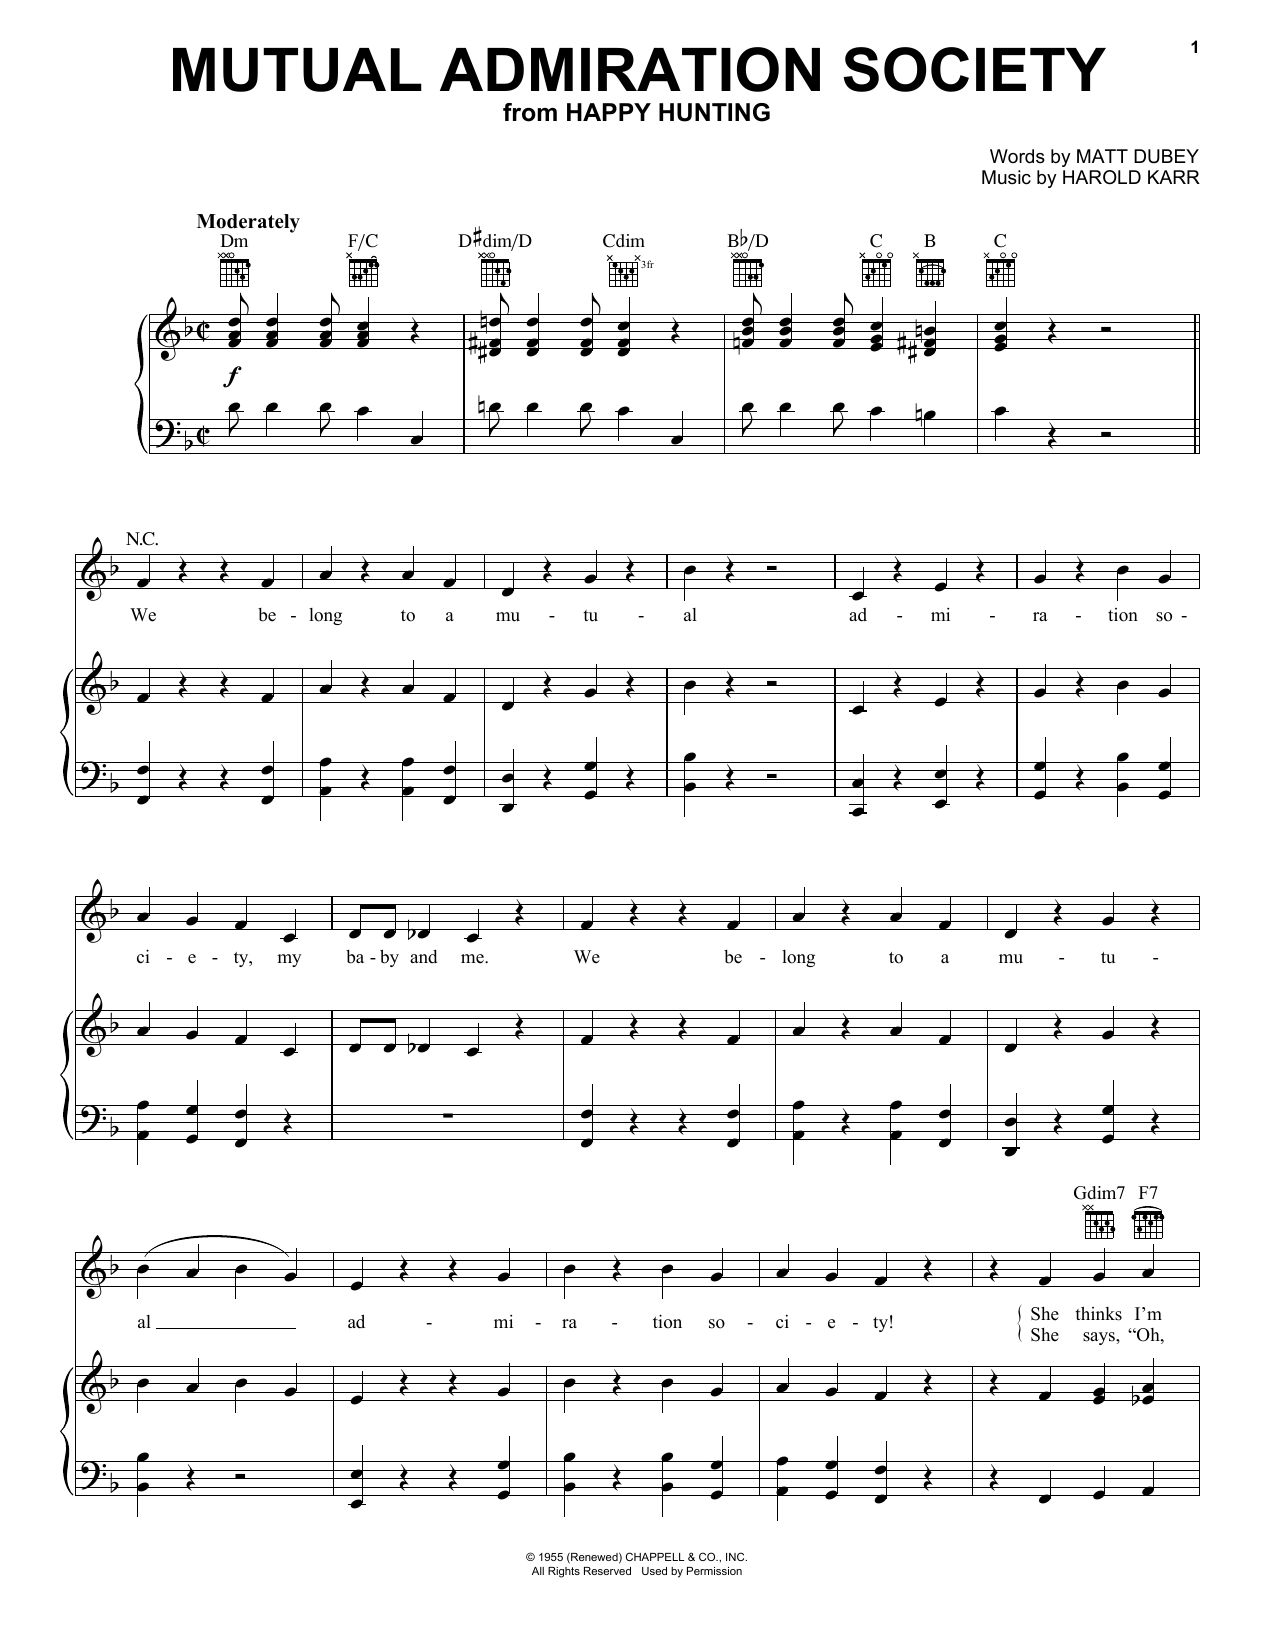 Harold Karr Mutual Admiration Society Sheet Music Notes & Chords for Piano, Vocal & Guitar Chords (Right-Hand Melody) - Download or Print PDF